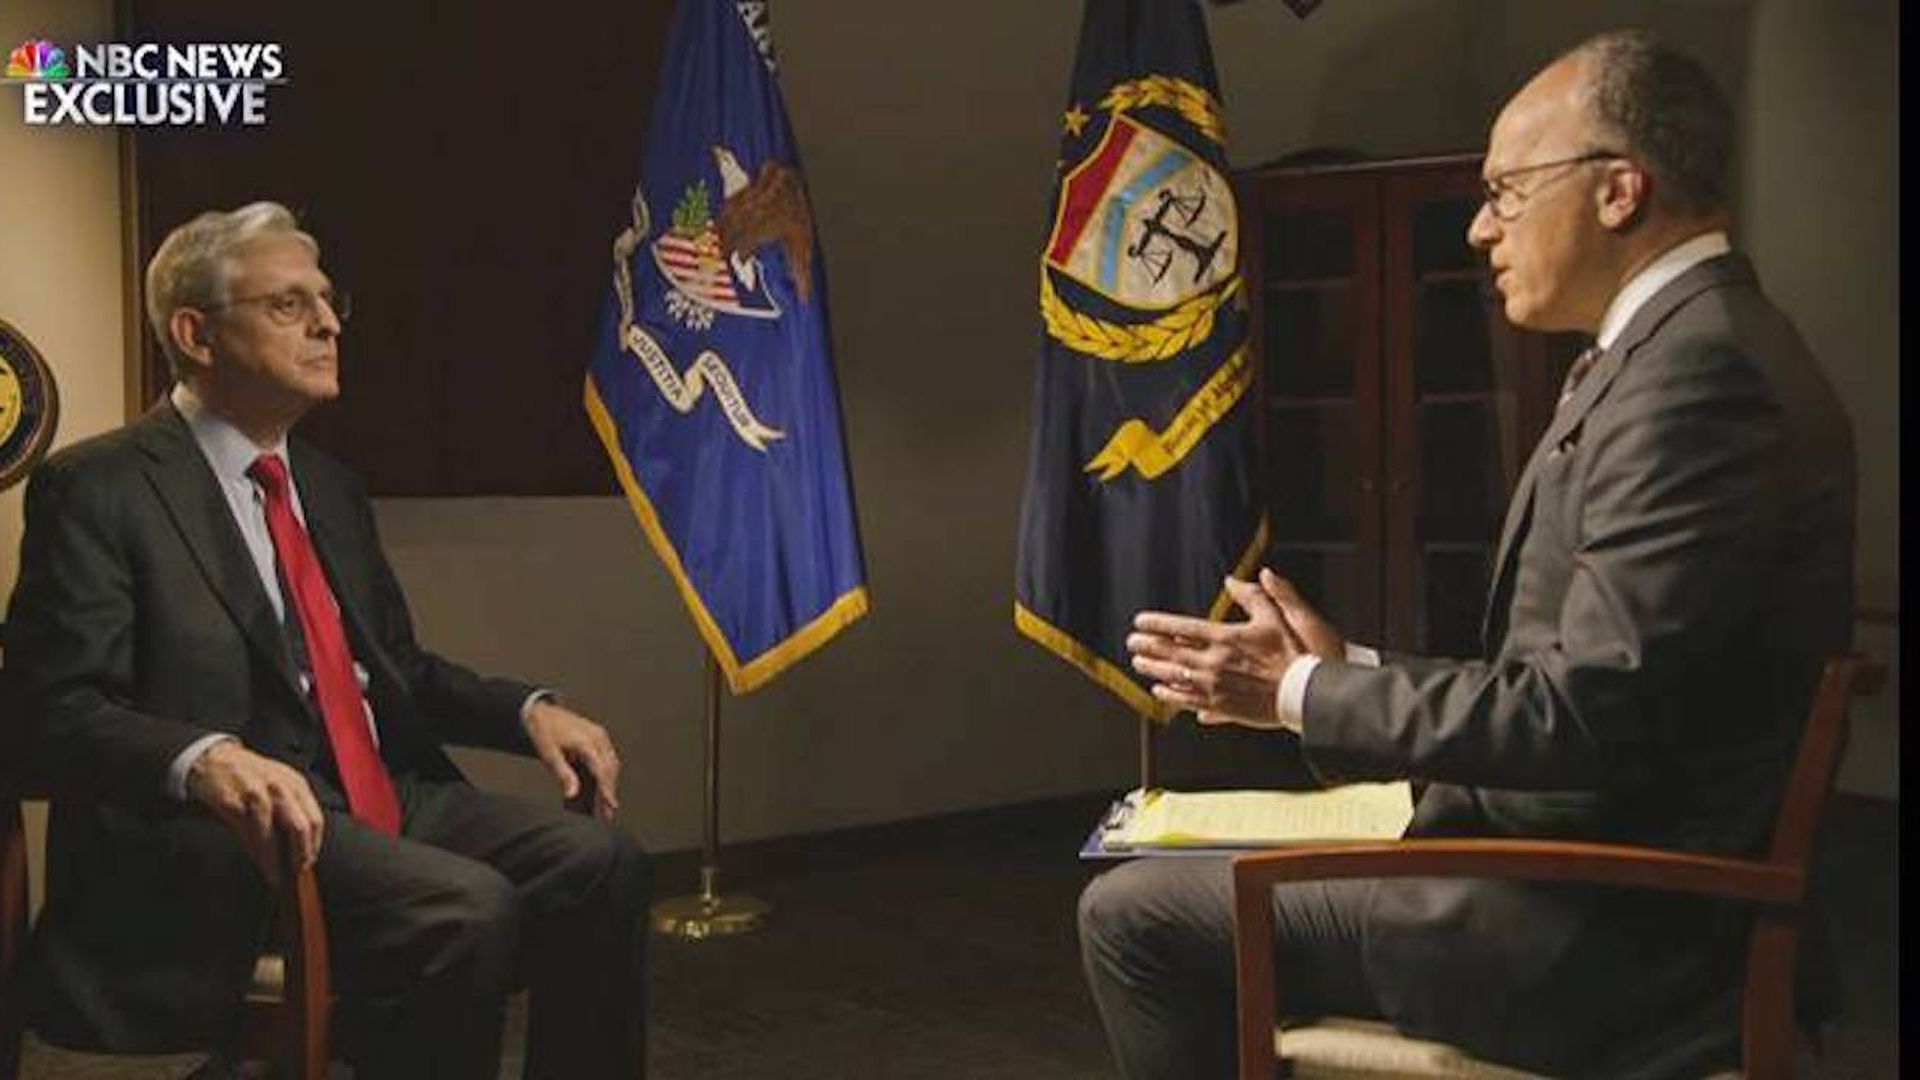 NBC News' Lester Holt interviews U.S. Attorney General Merrick Garland.